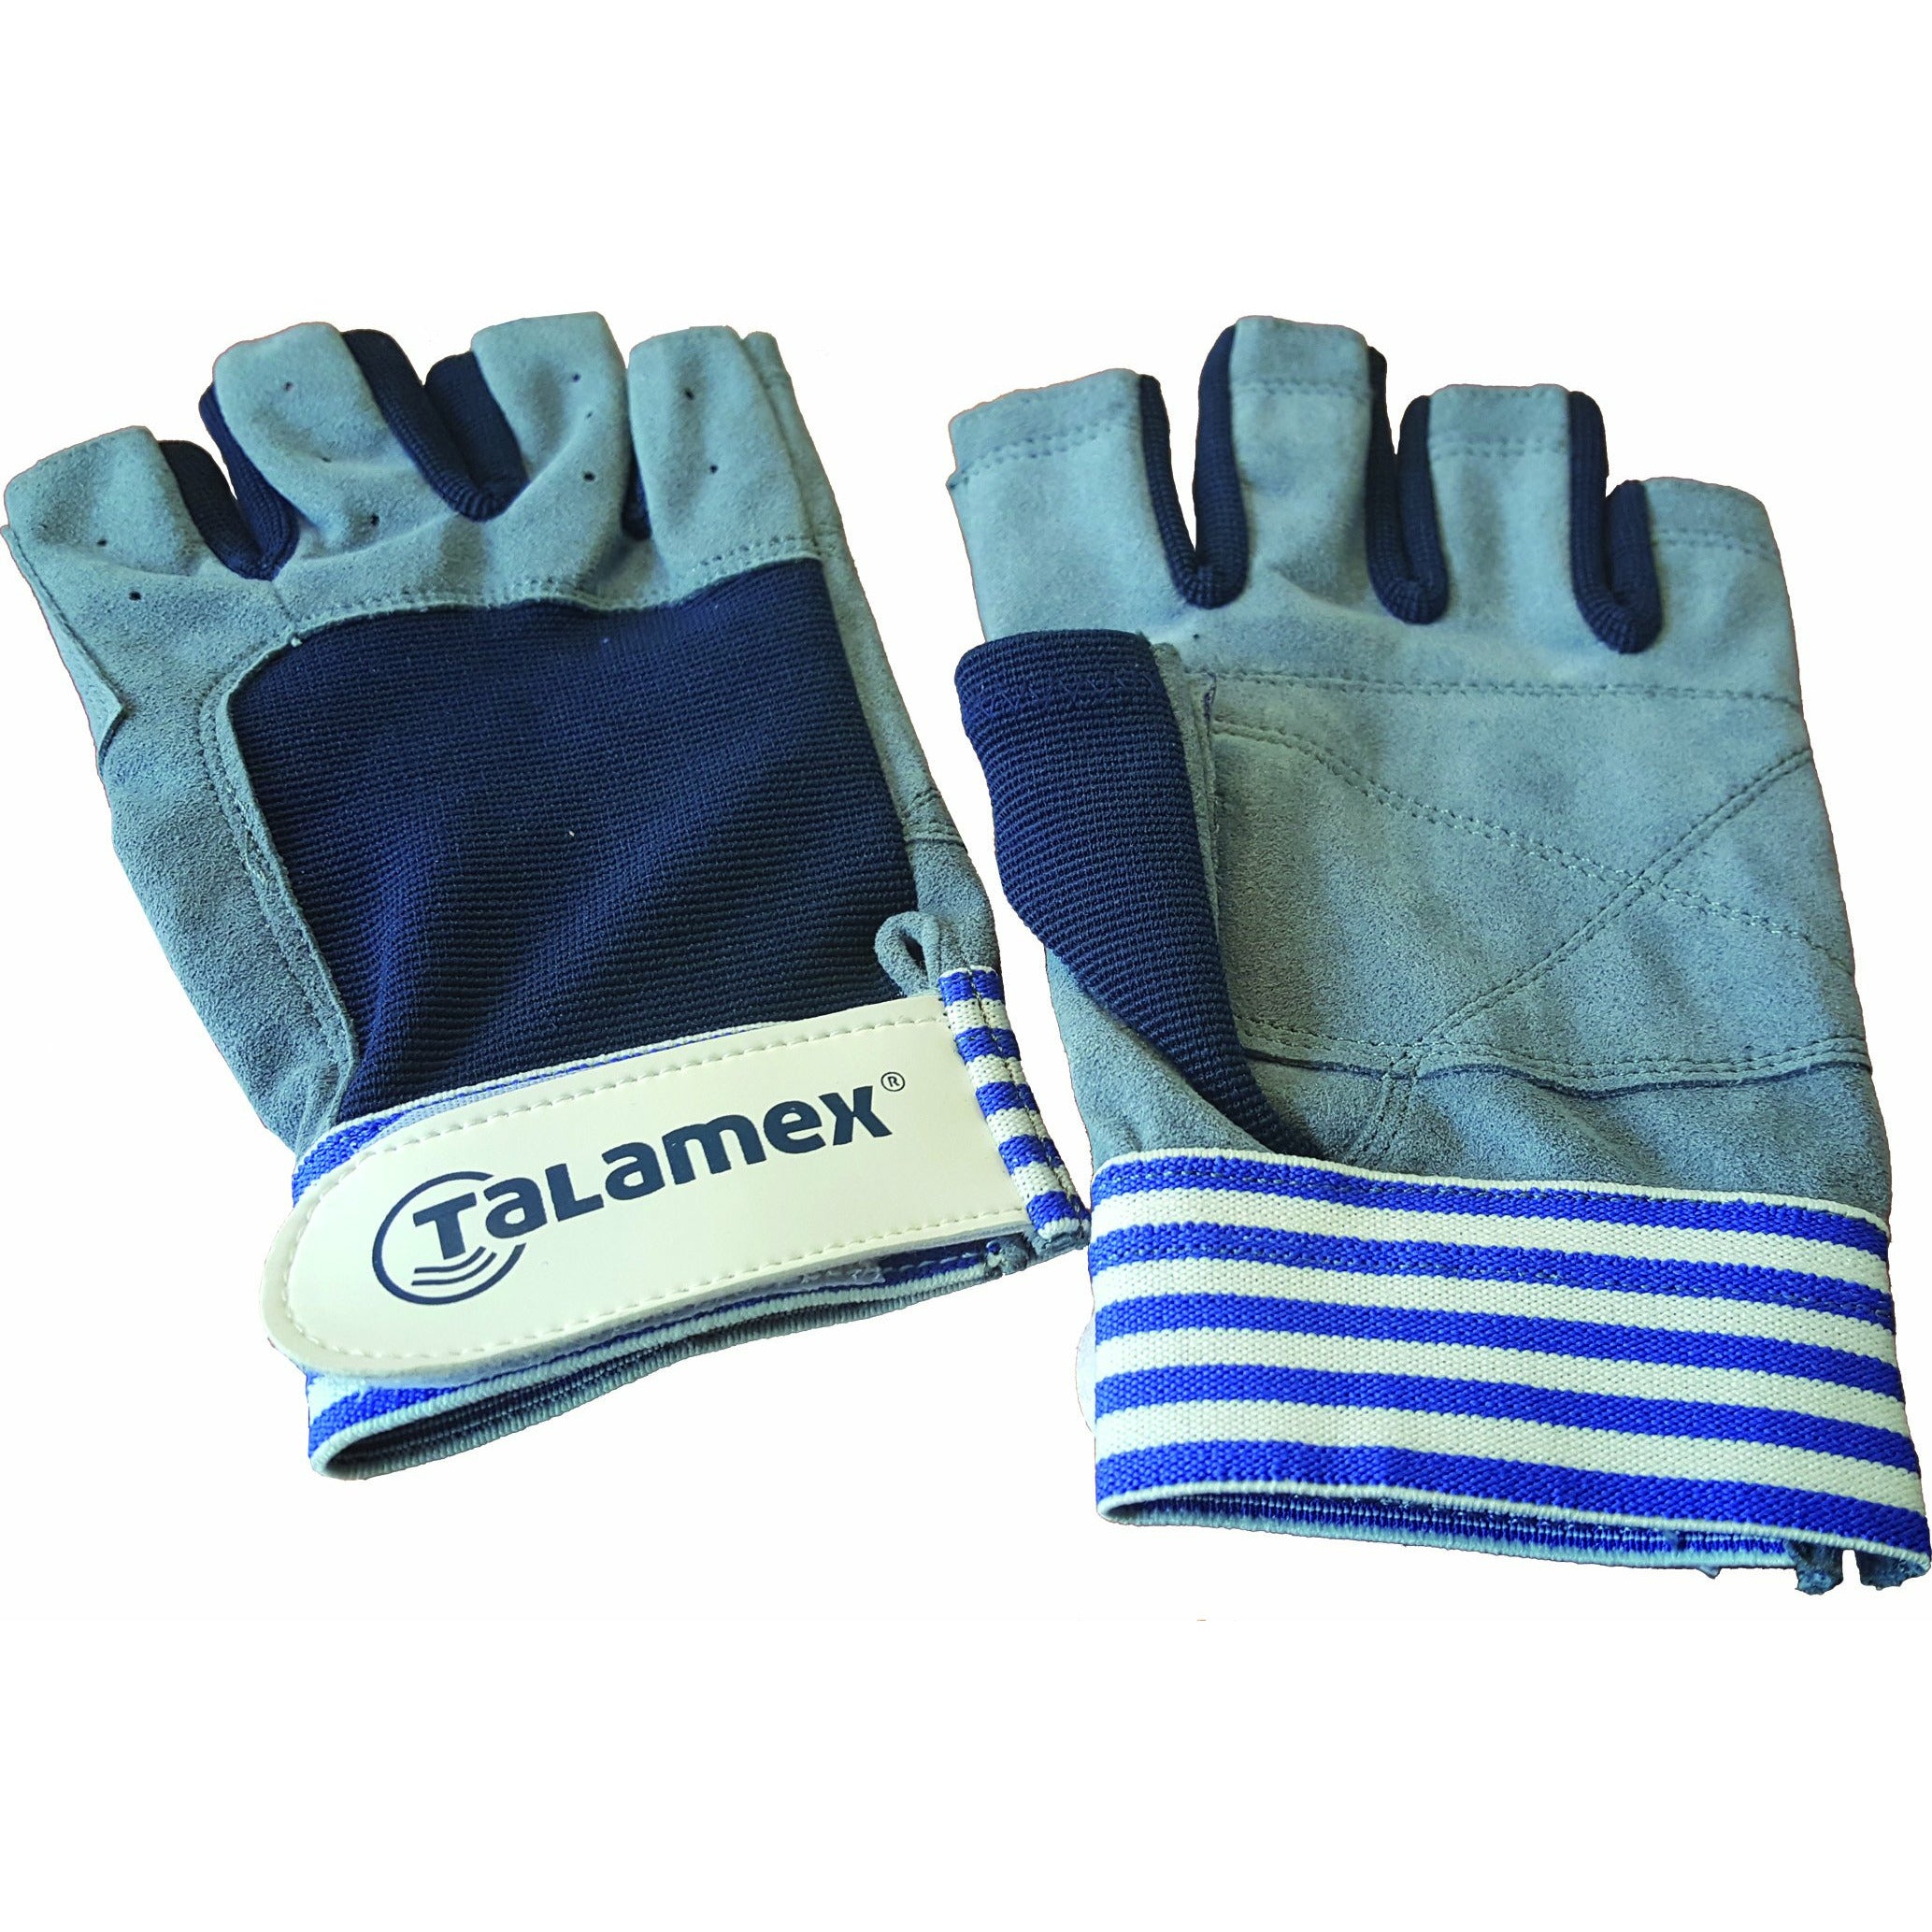 Talamex S'Gloves Amara Large/Open 20805003